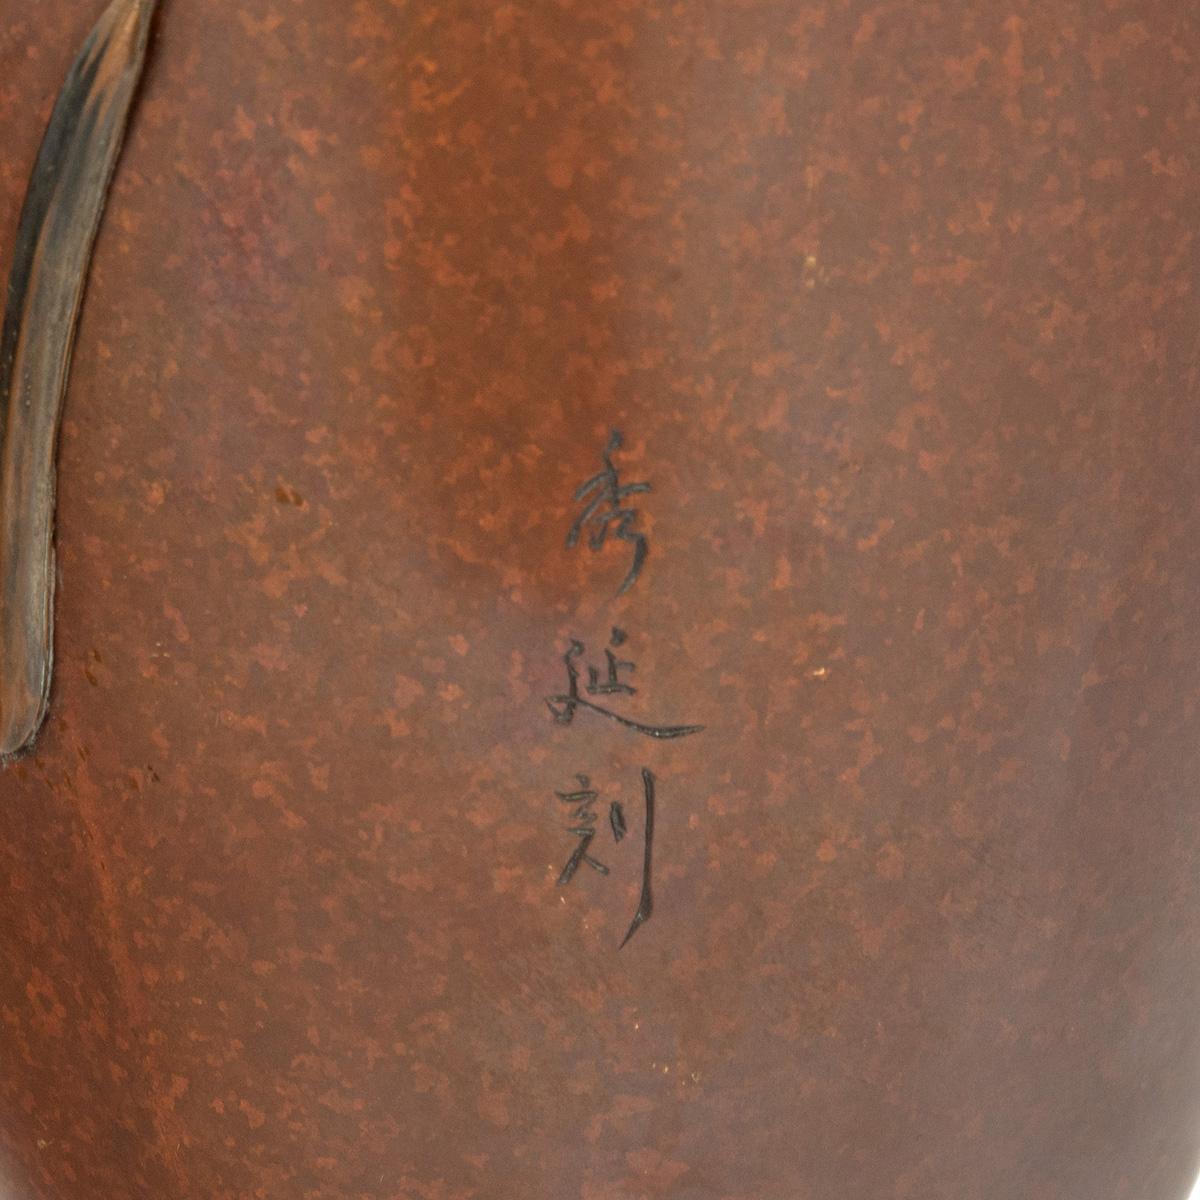 Meiji period bronze vases by Hidenobu